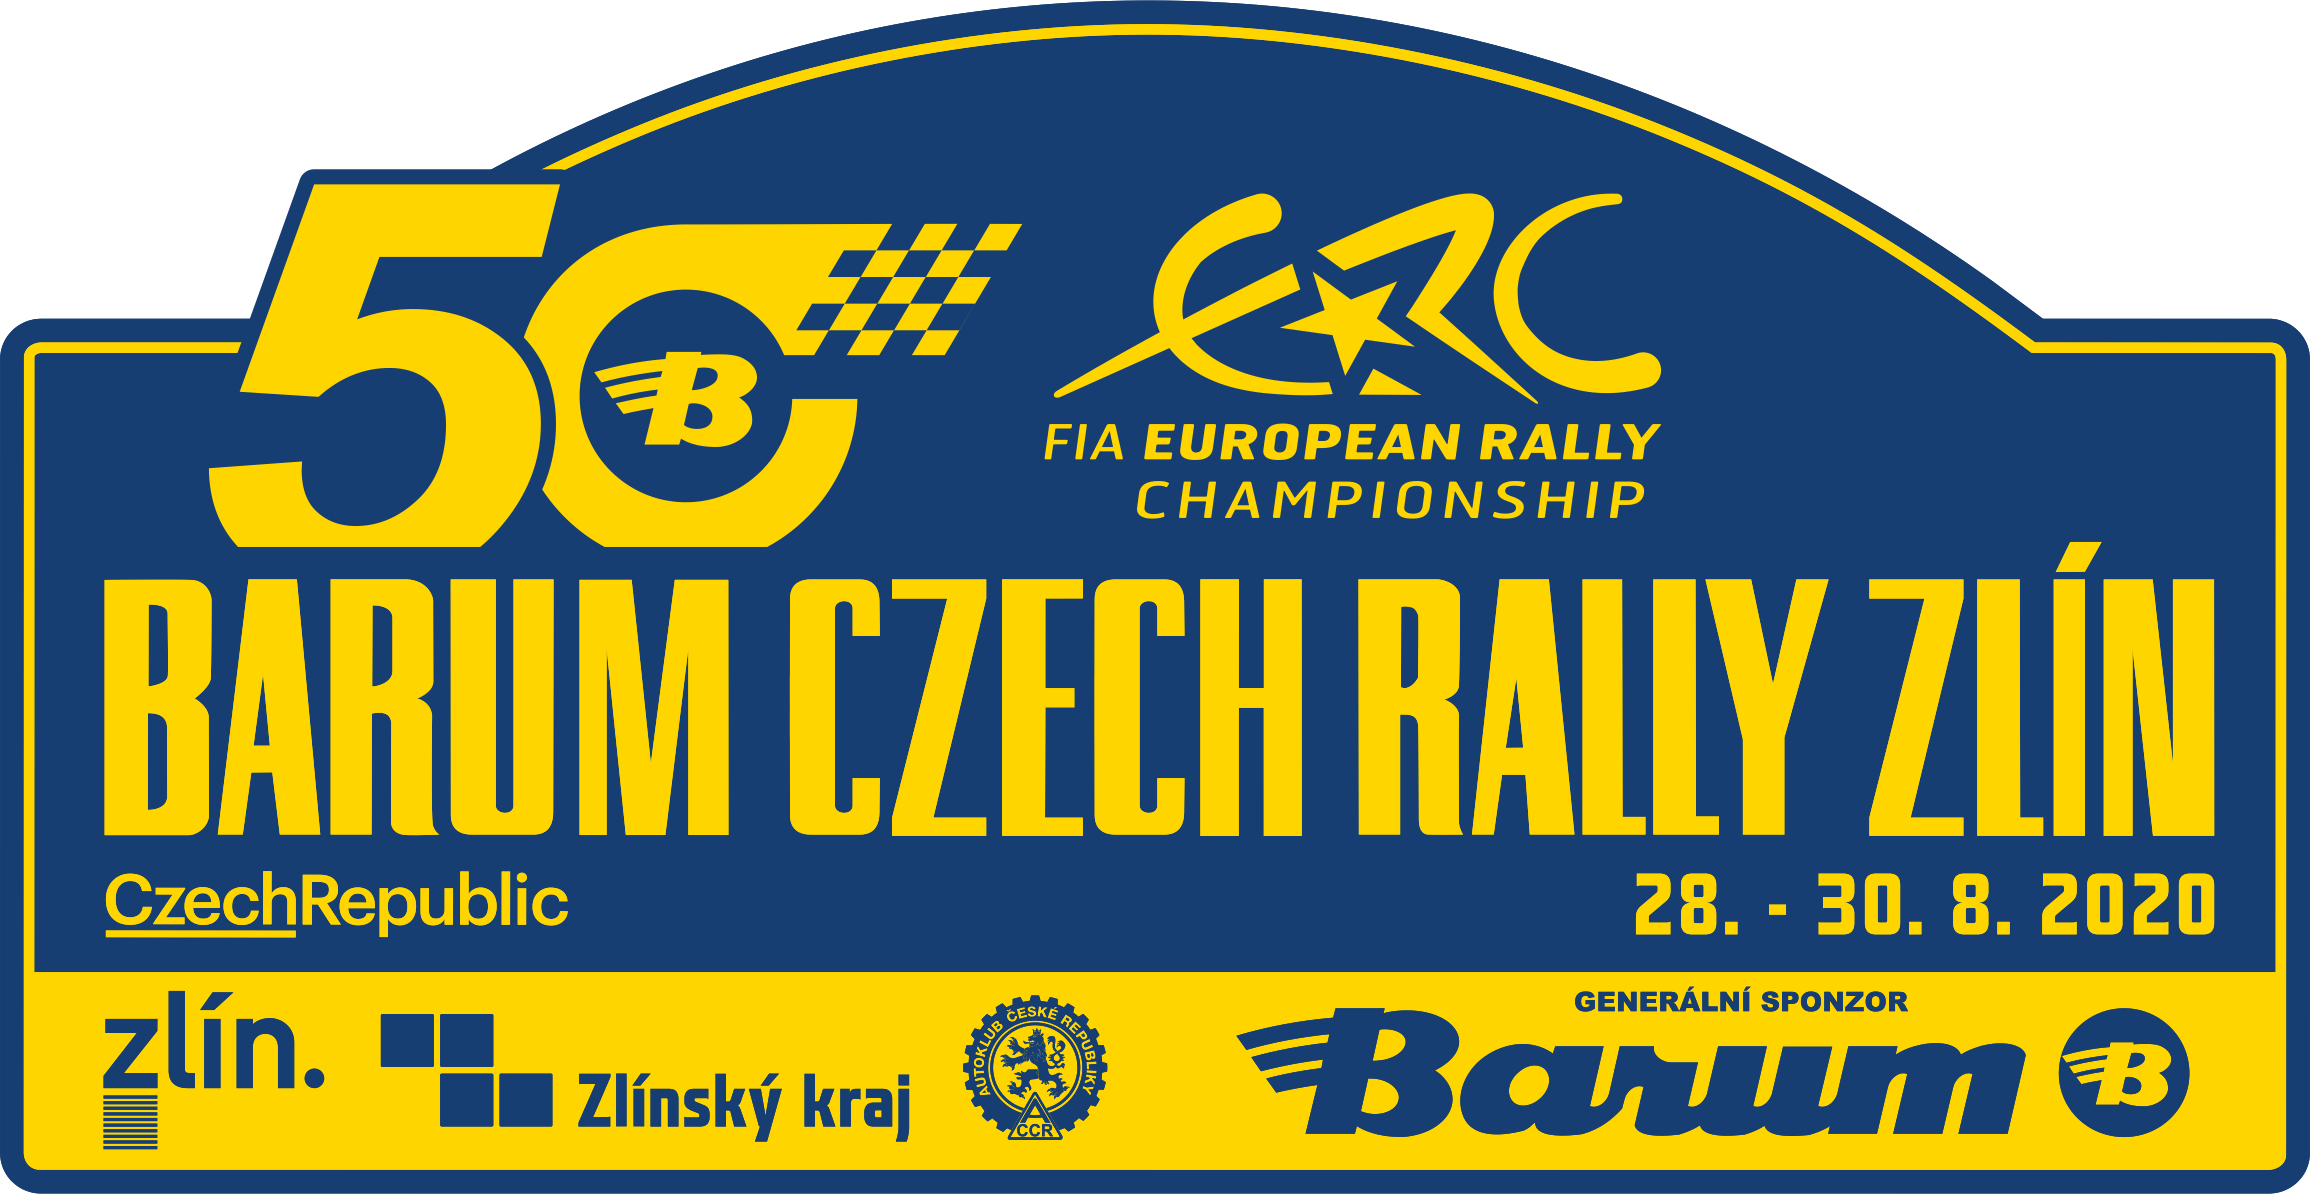 Barum Czech Rally Zlin